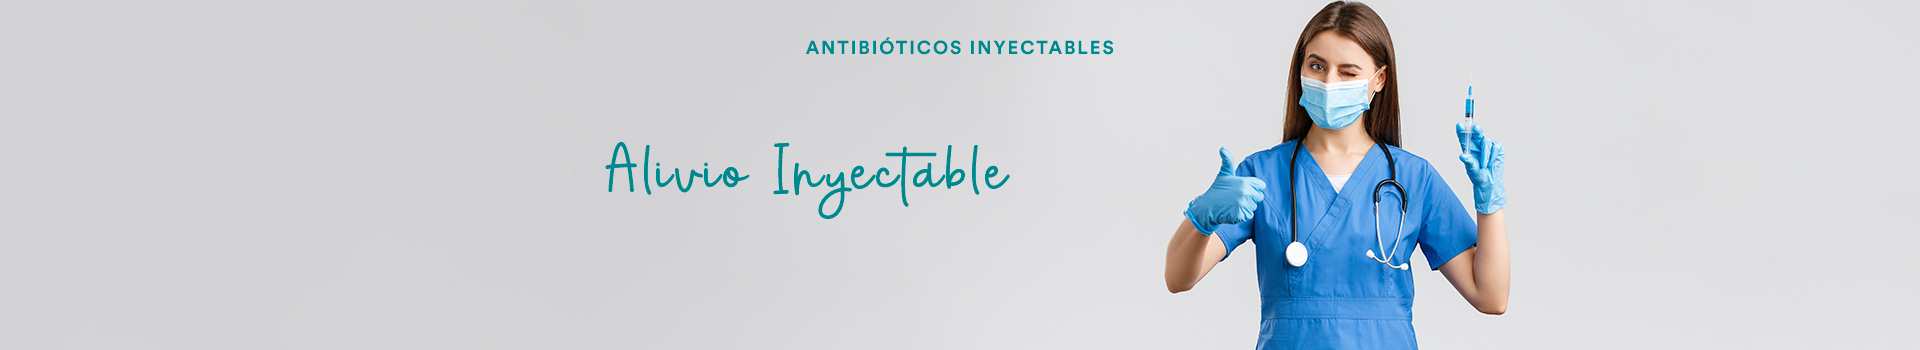 Antibioticos inyectables